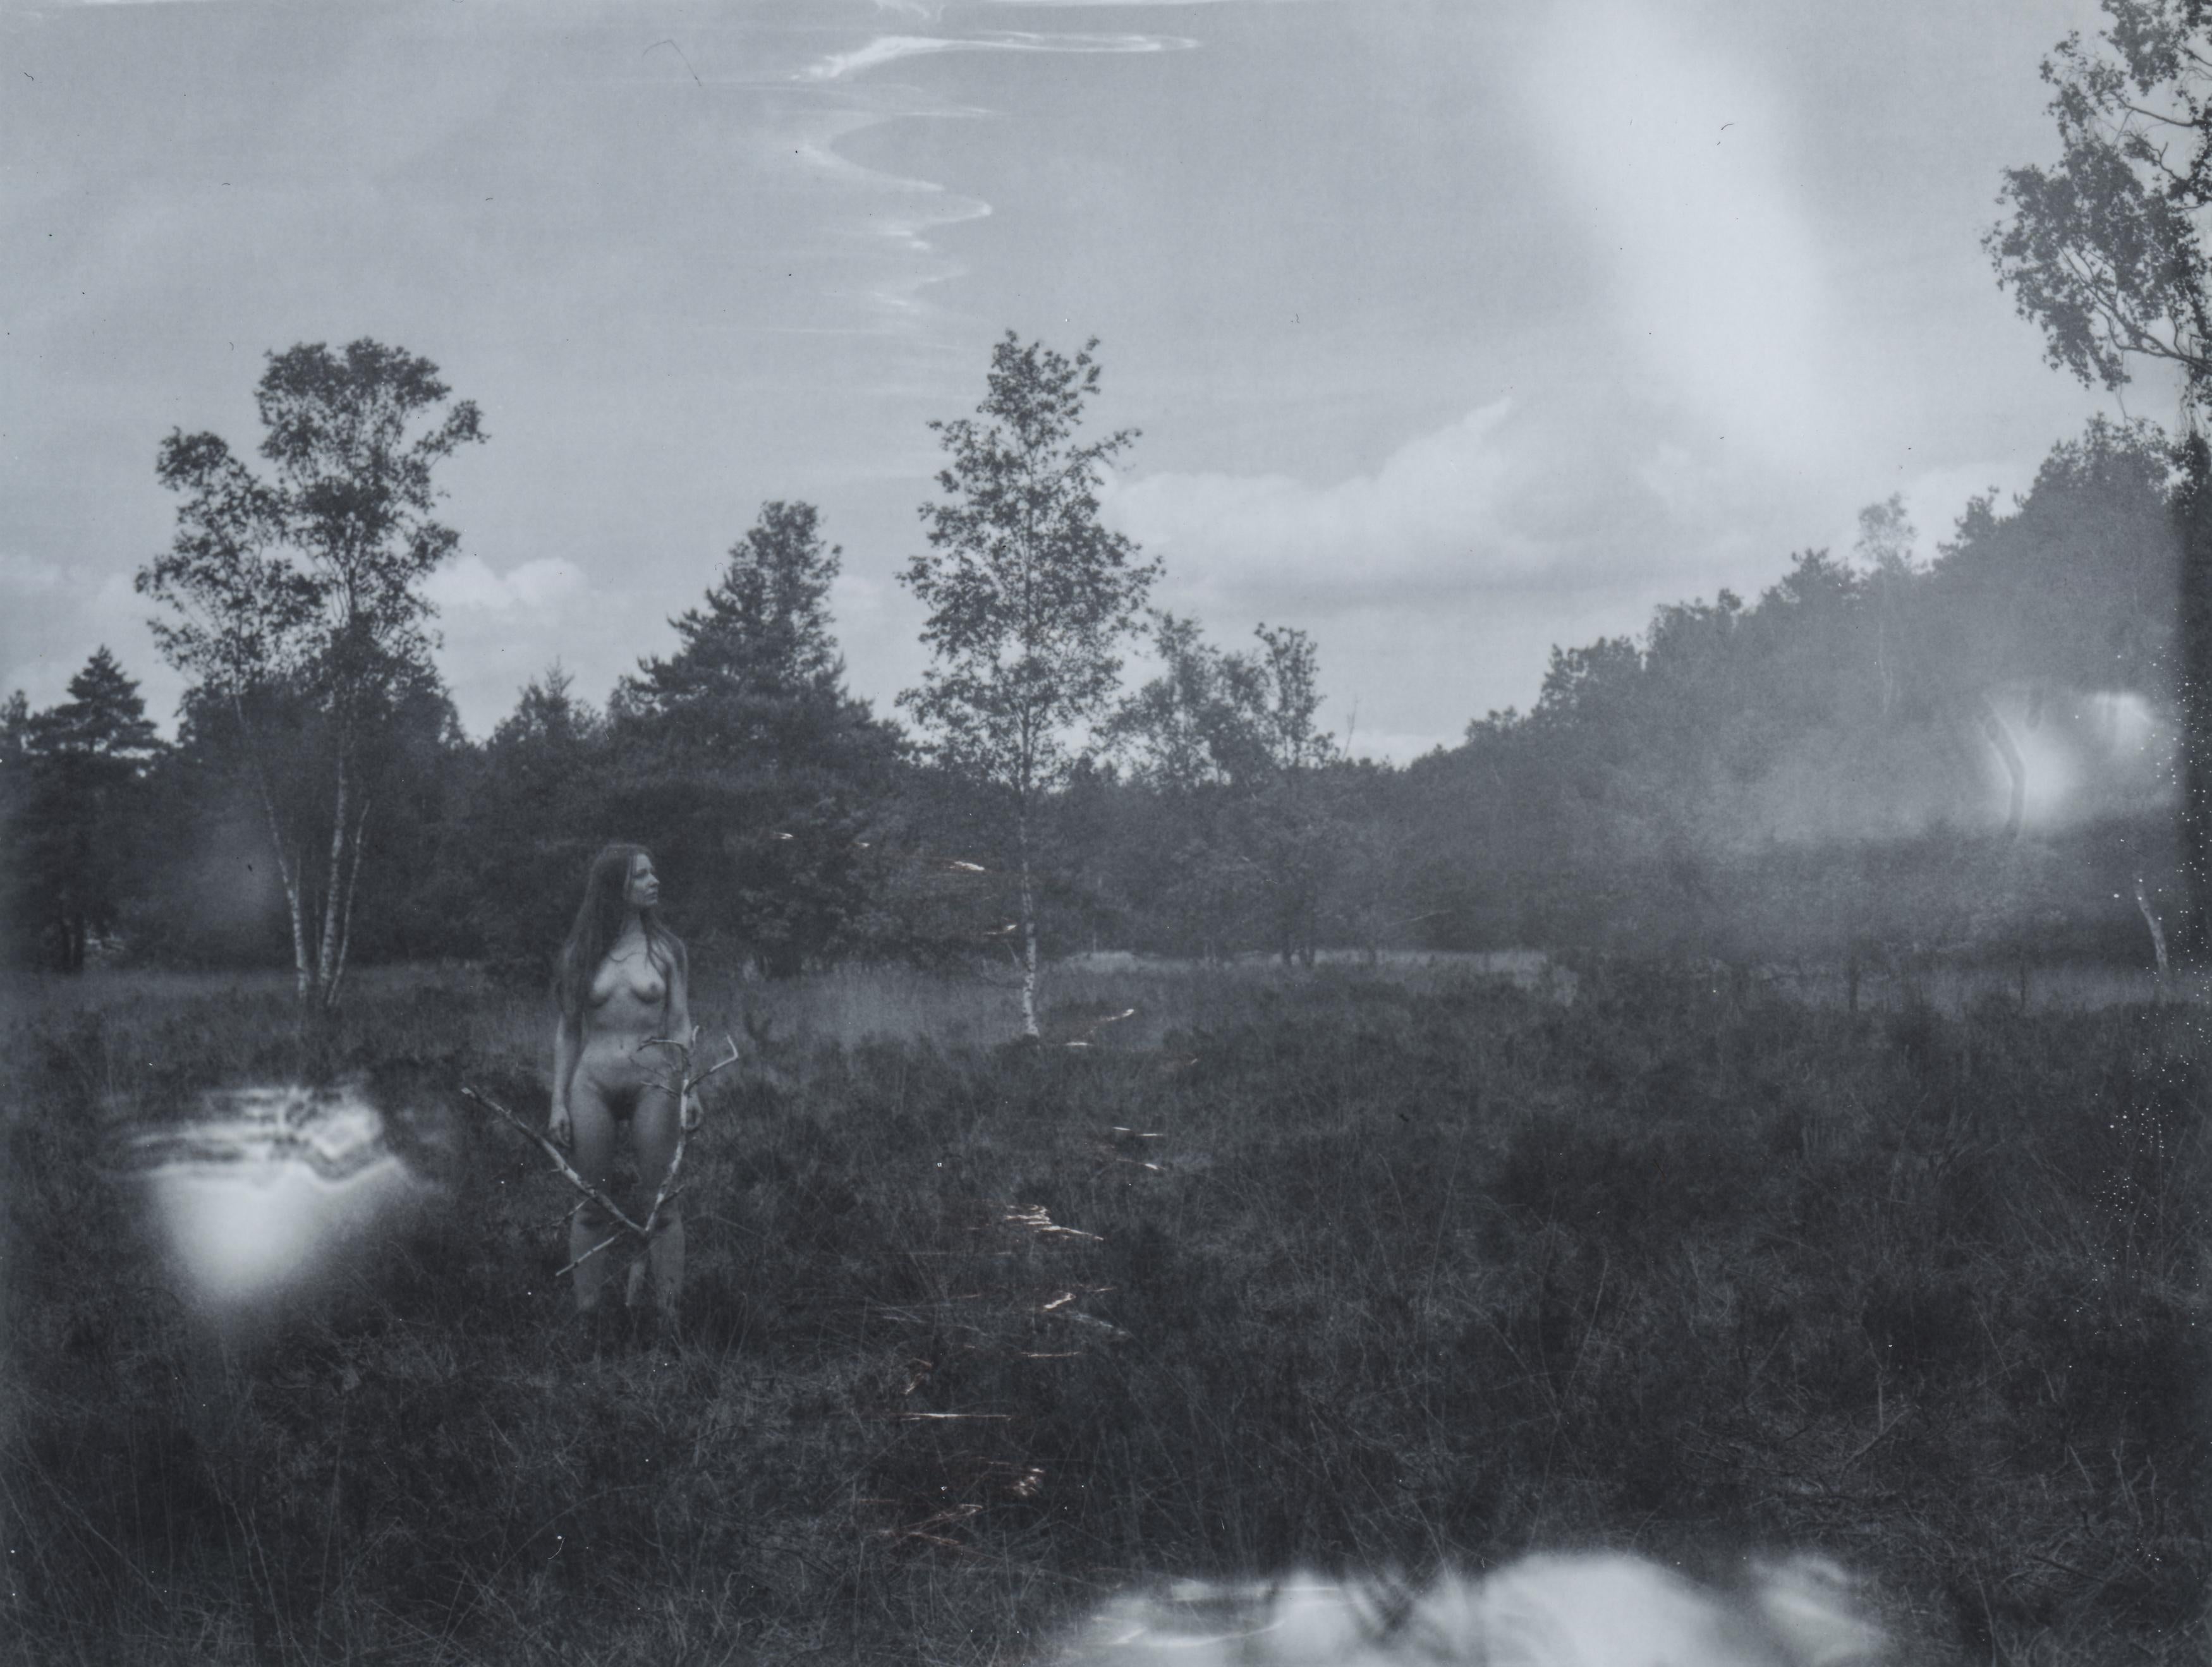 Kirsten Thys van den Audenaerde Nude Photograph - Episode - Polaroid, Women, 21st Century, Nude, Landscape